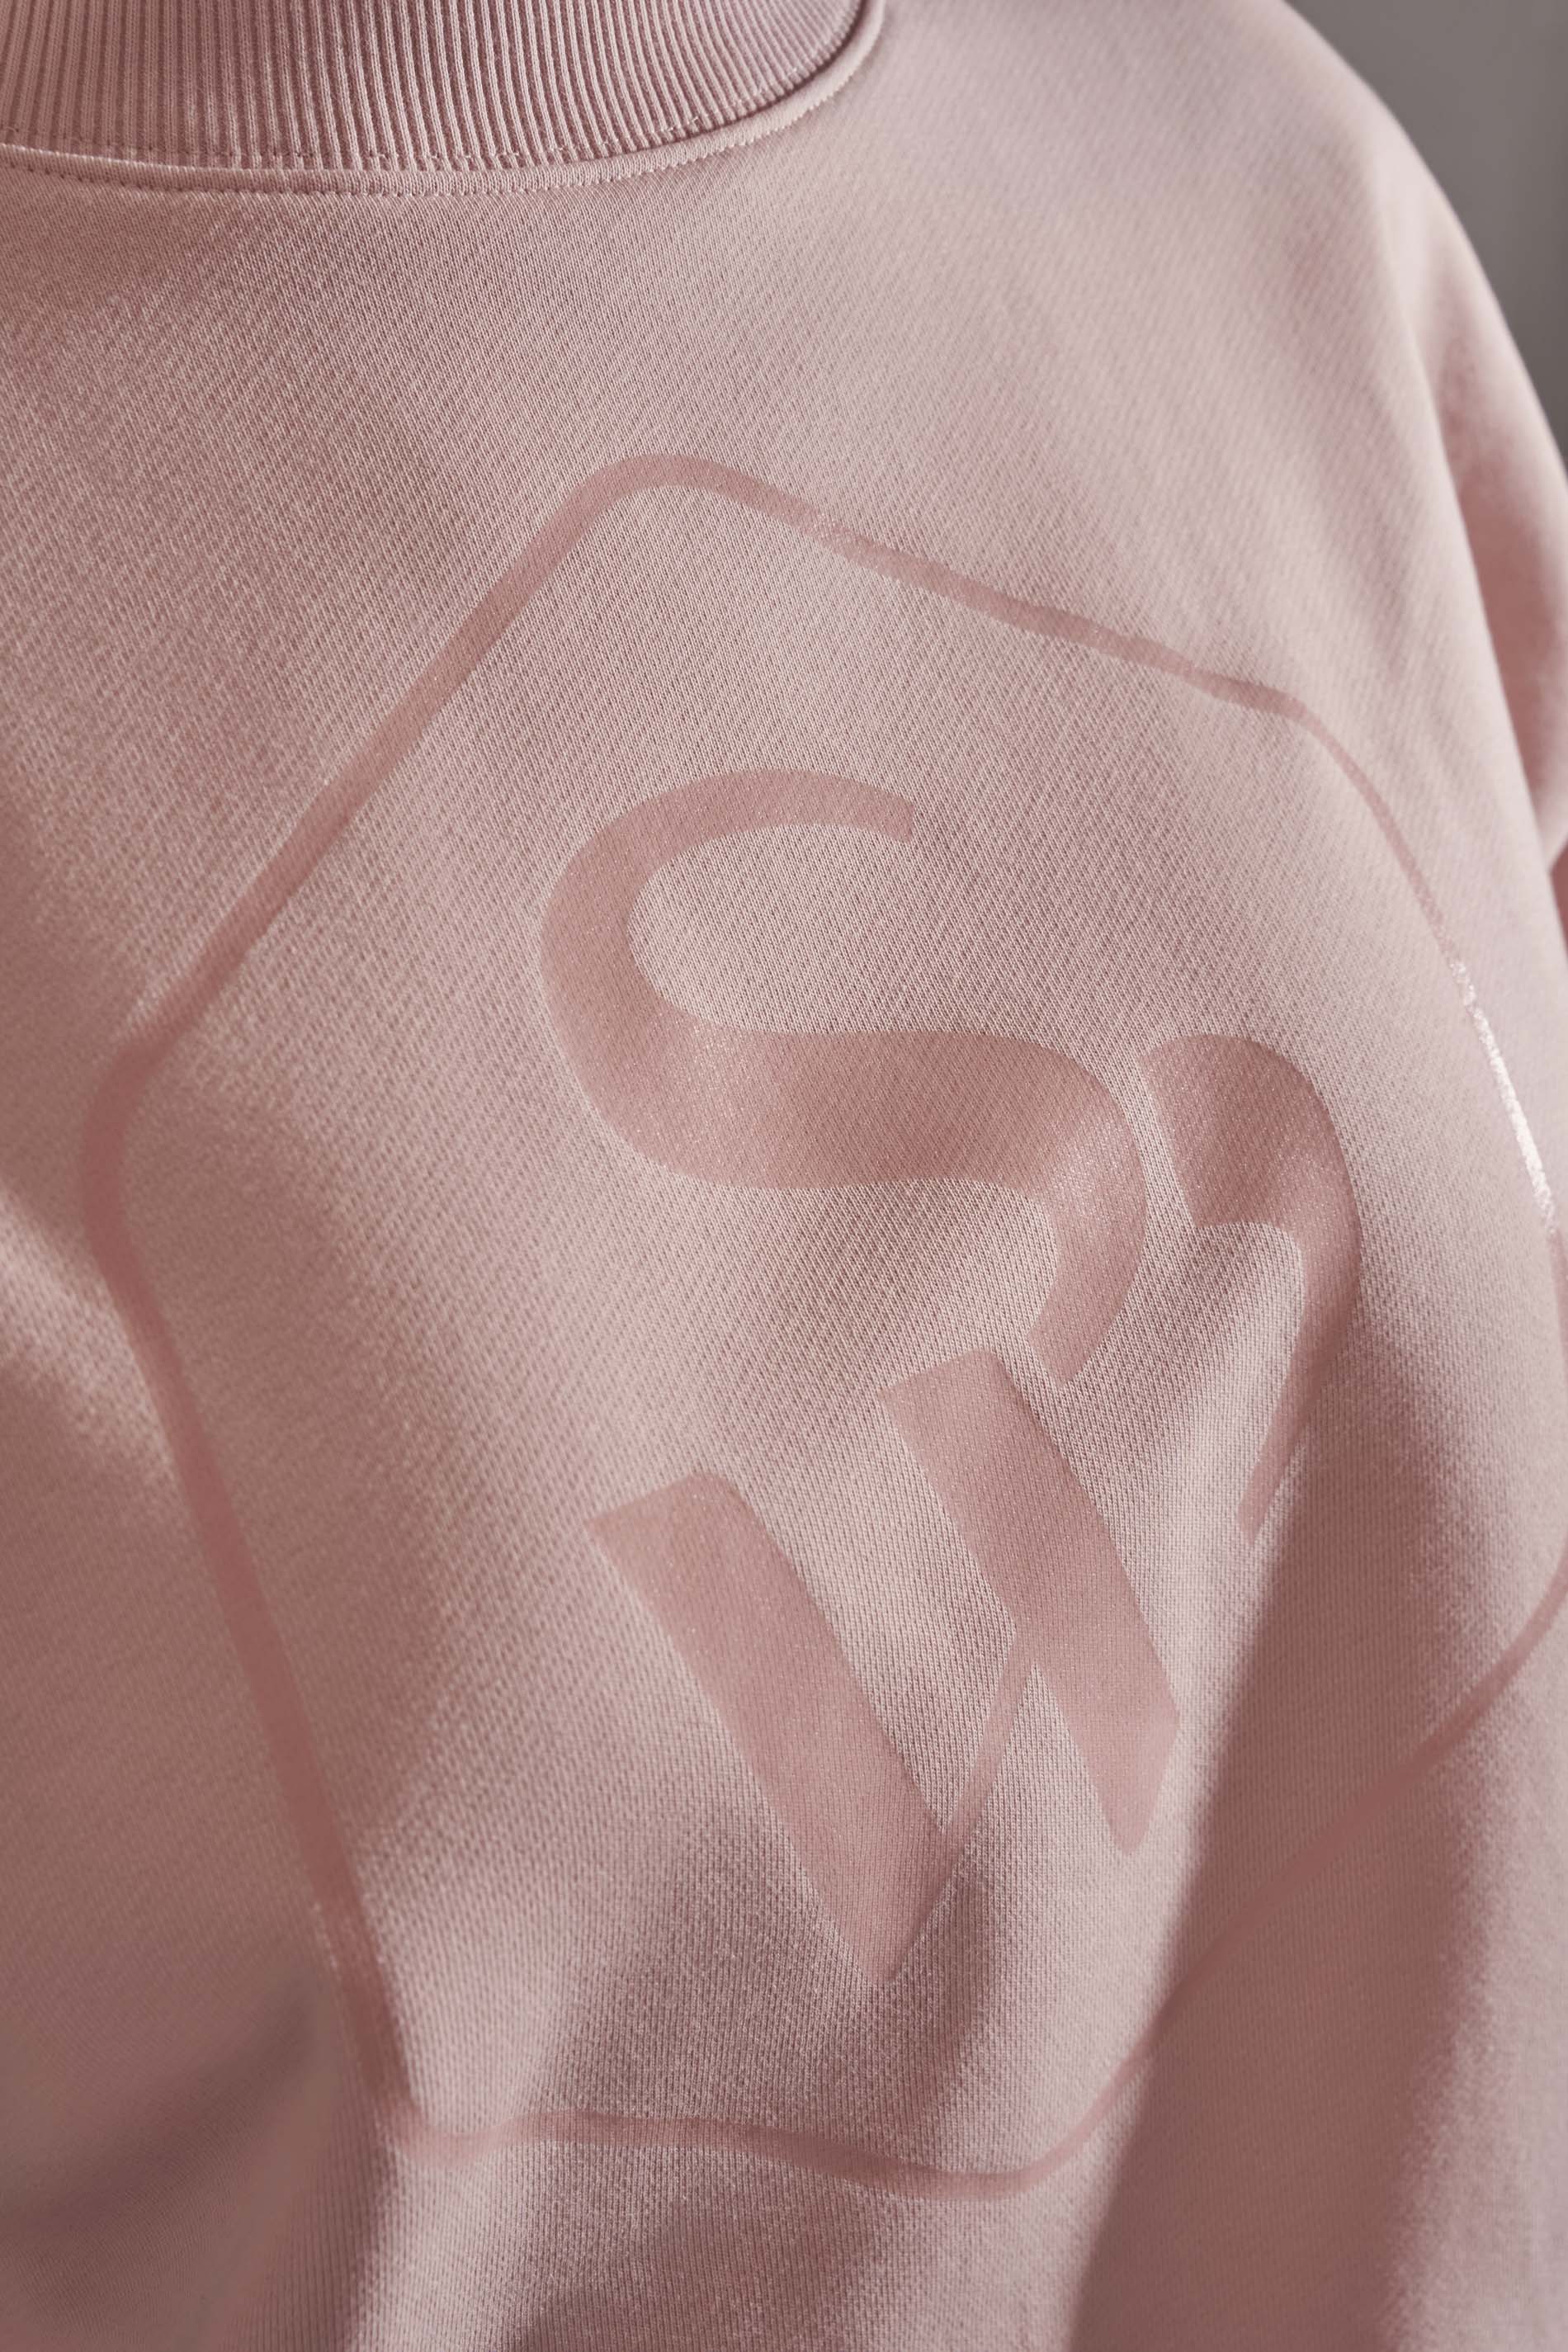 Sweatshirt Serie Cozy Detail View 01 | mey®